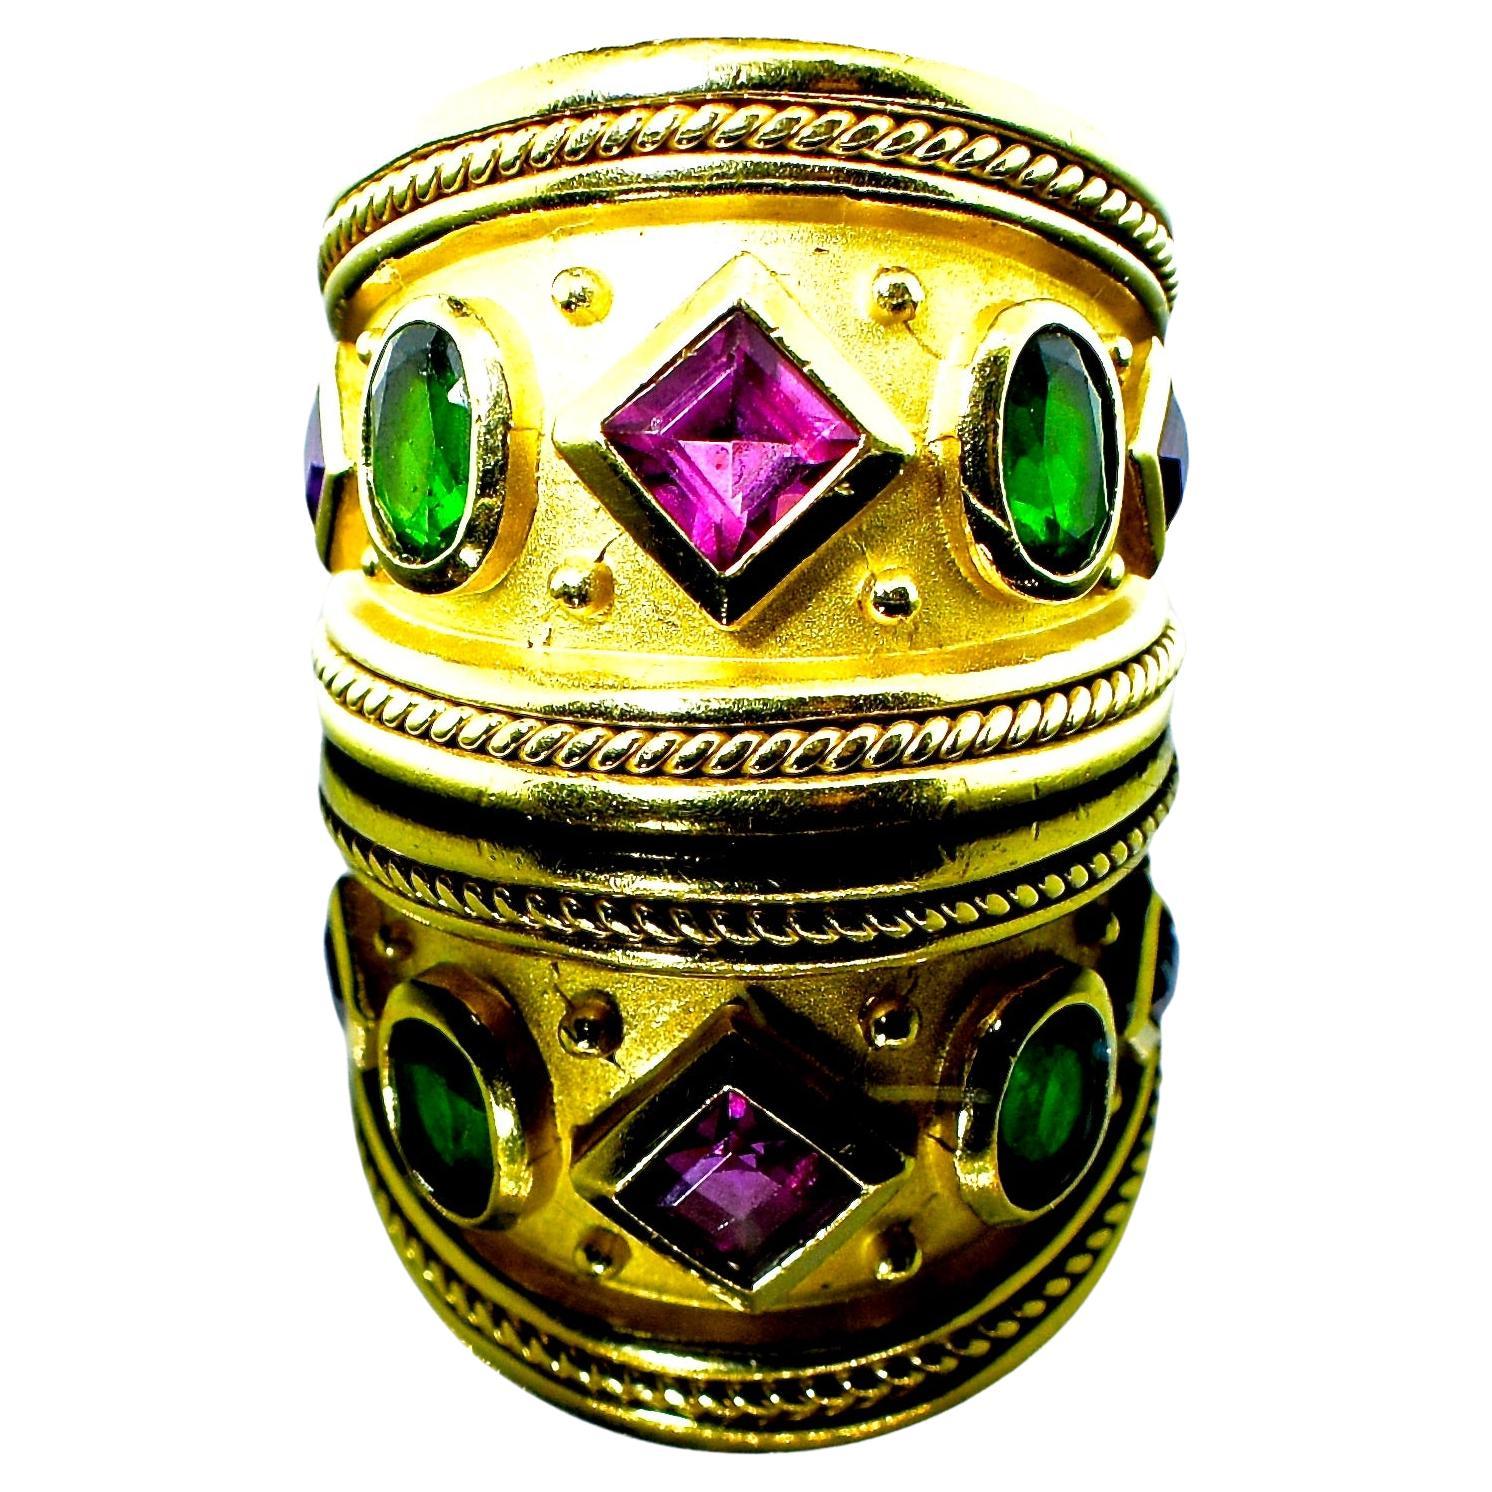  18K Vintage Ring set with Fine Multi-Color Natural Tourmalines